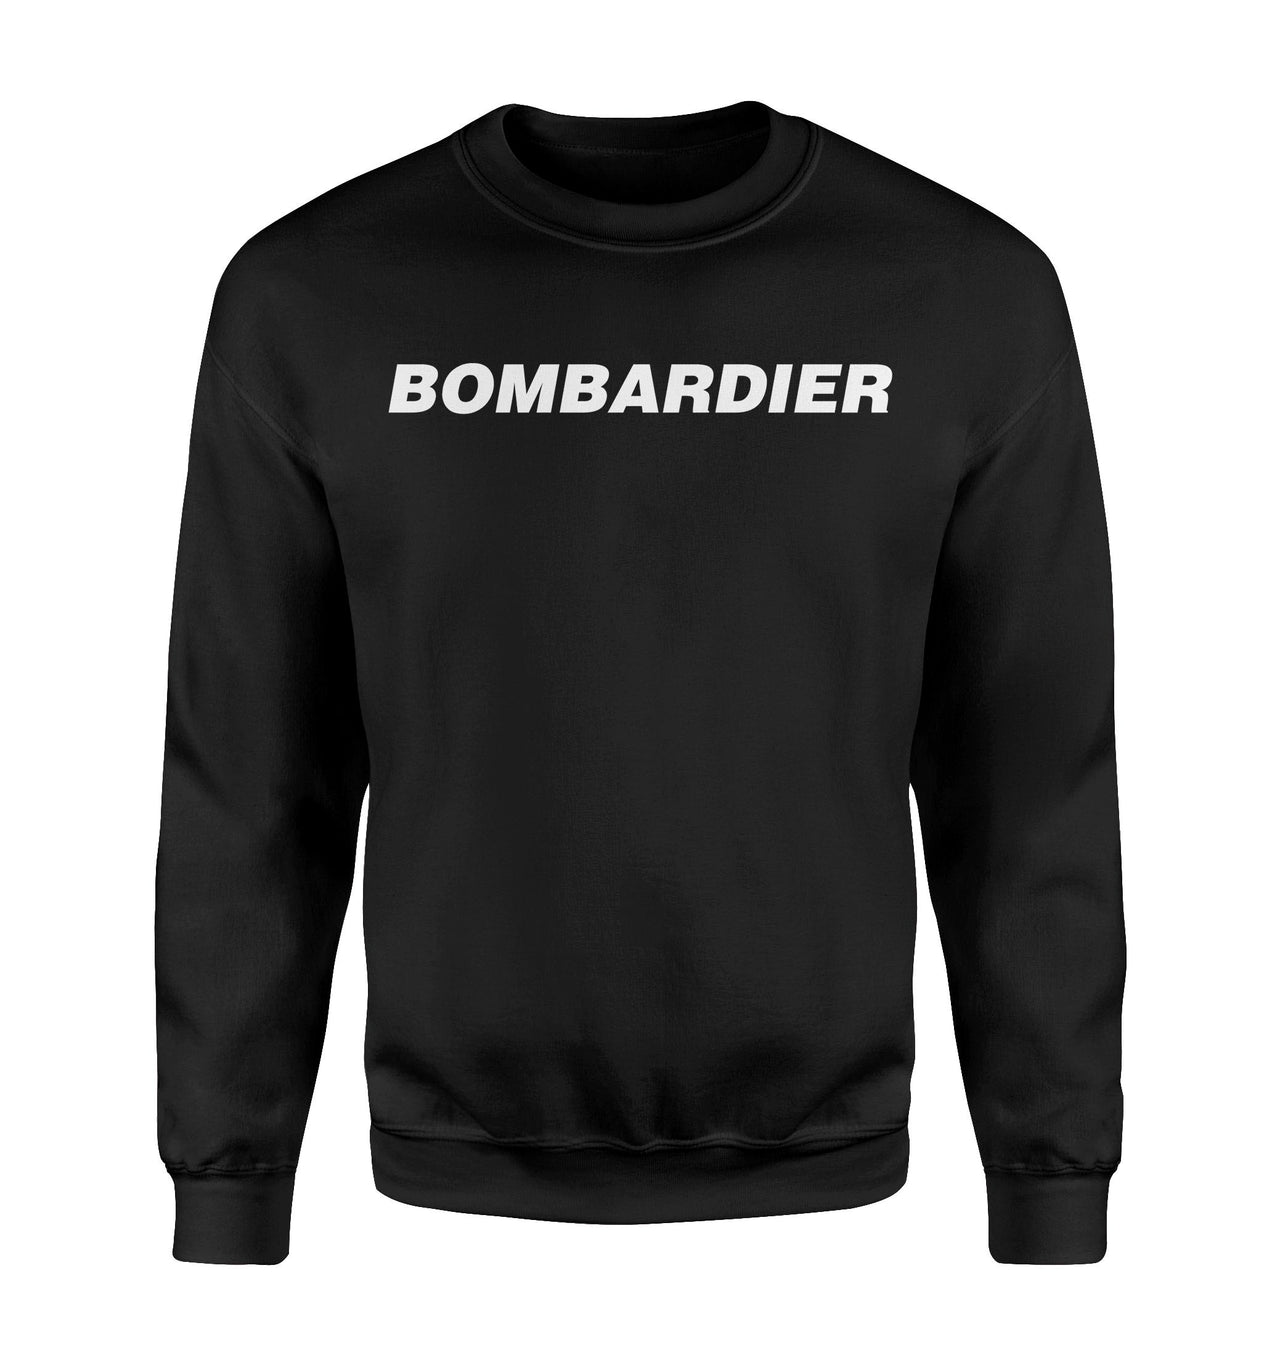 Bombardier & Text Designed Sweatshirts